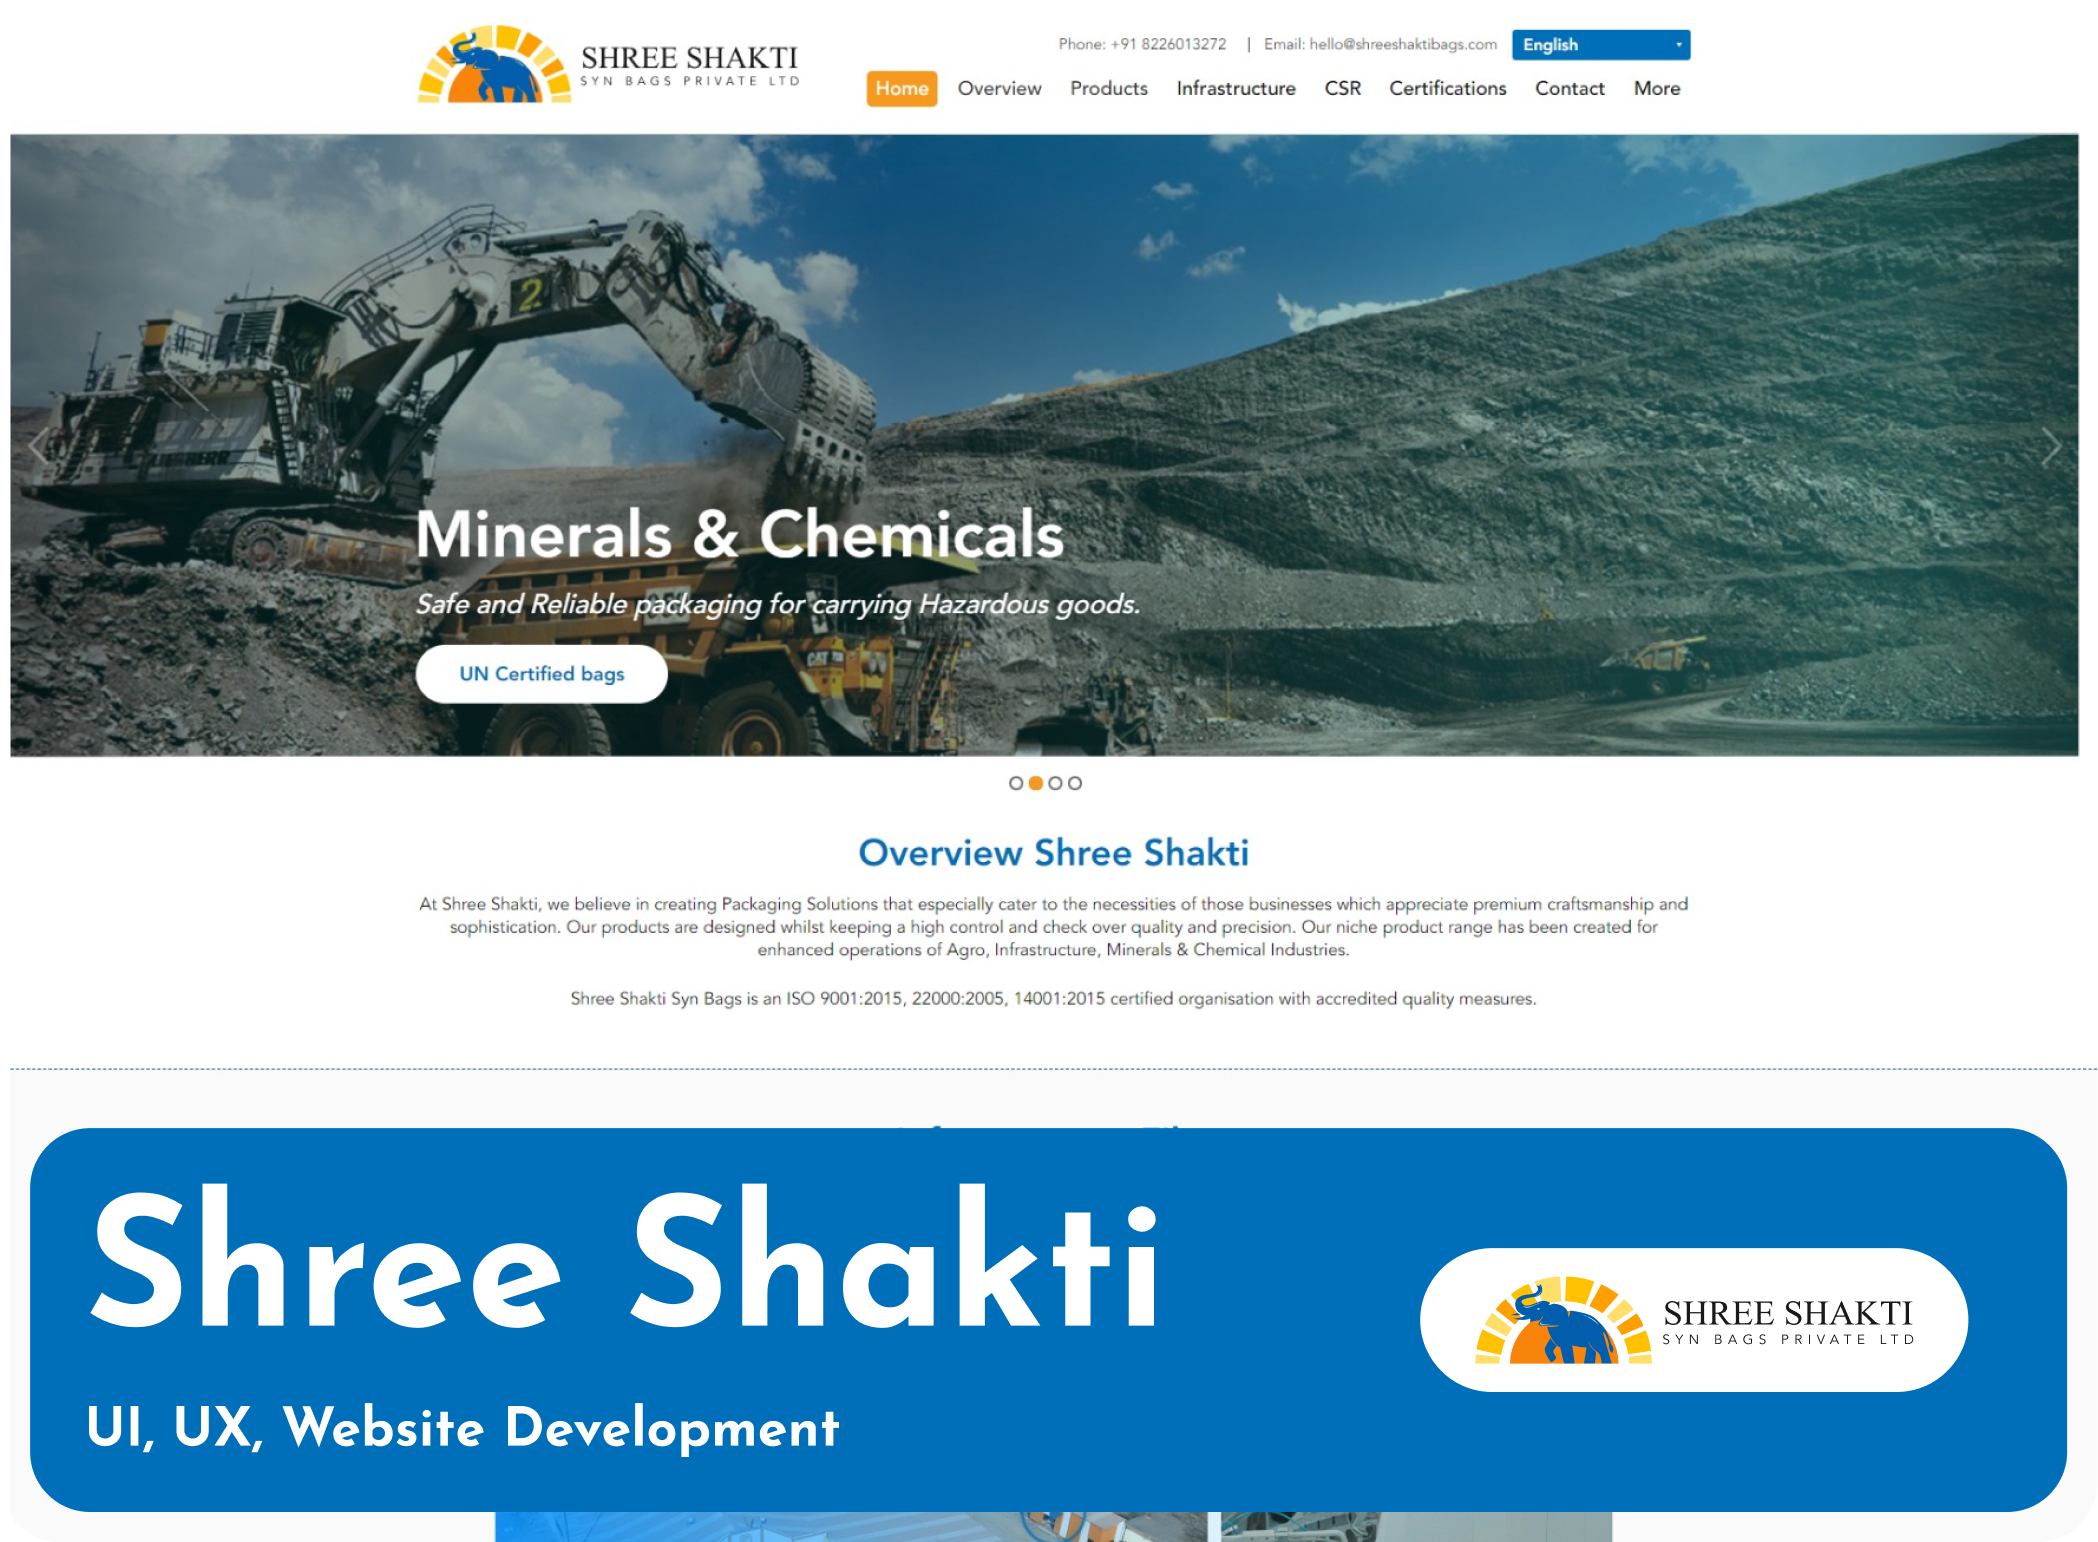 Shree Shakti webiste